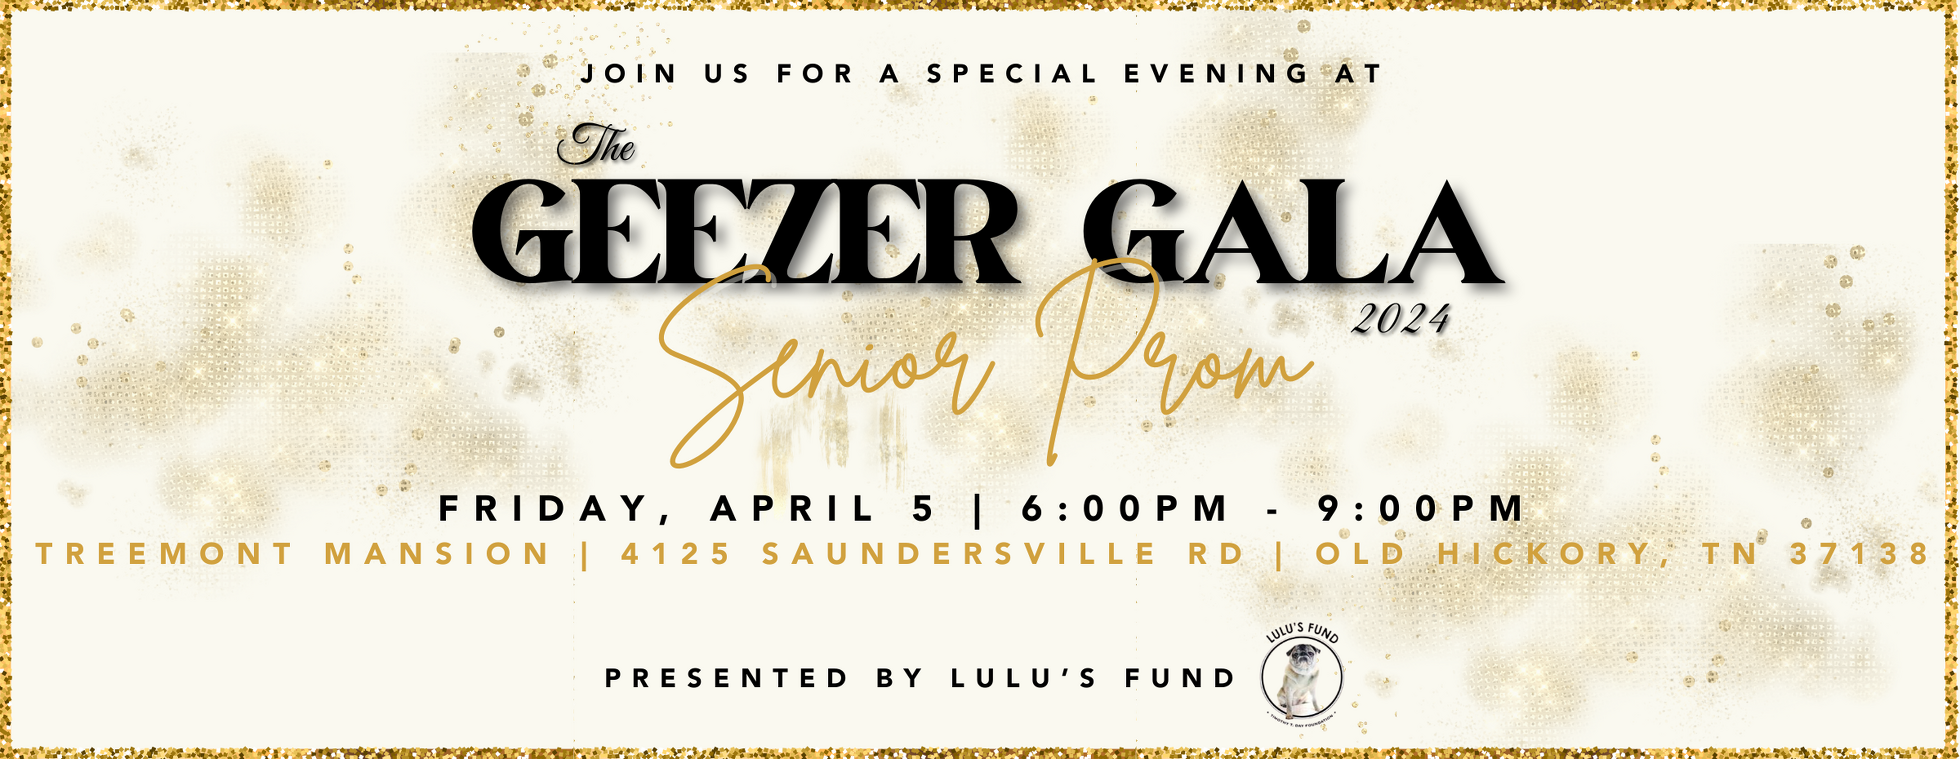 The Geezer Gala: Senior Prom